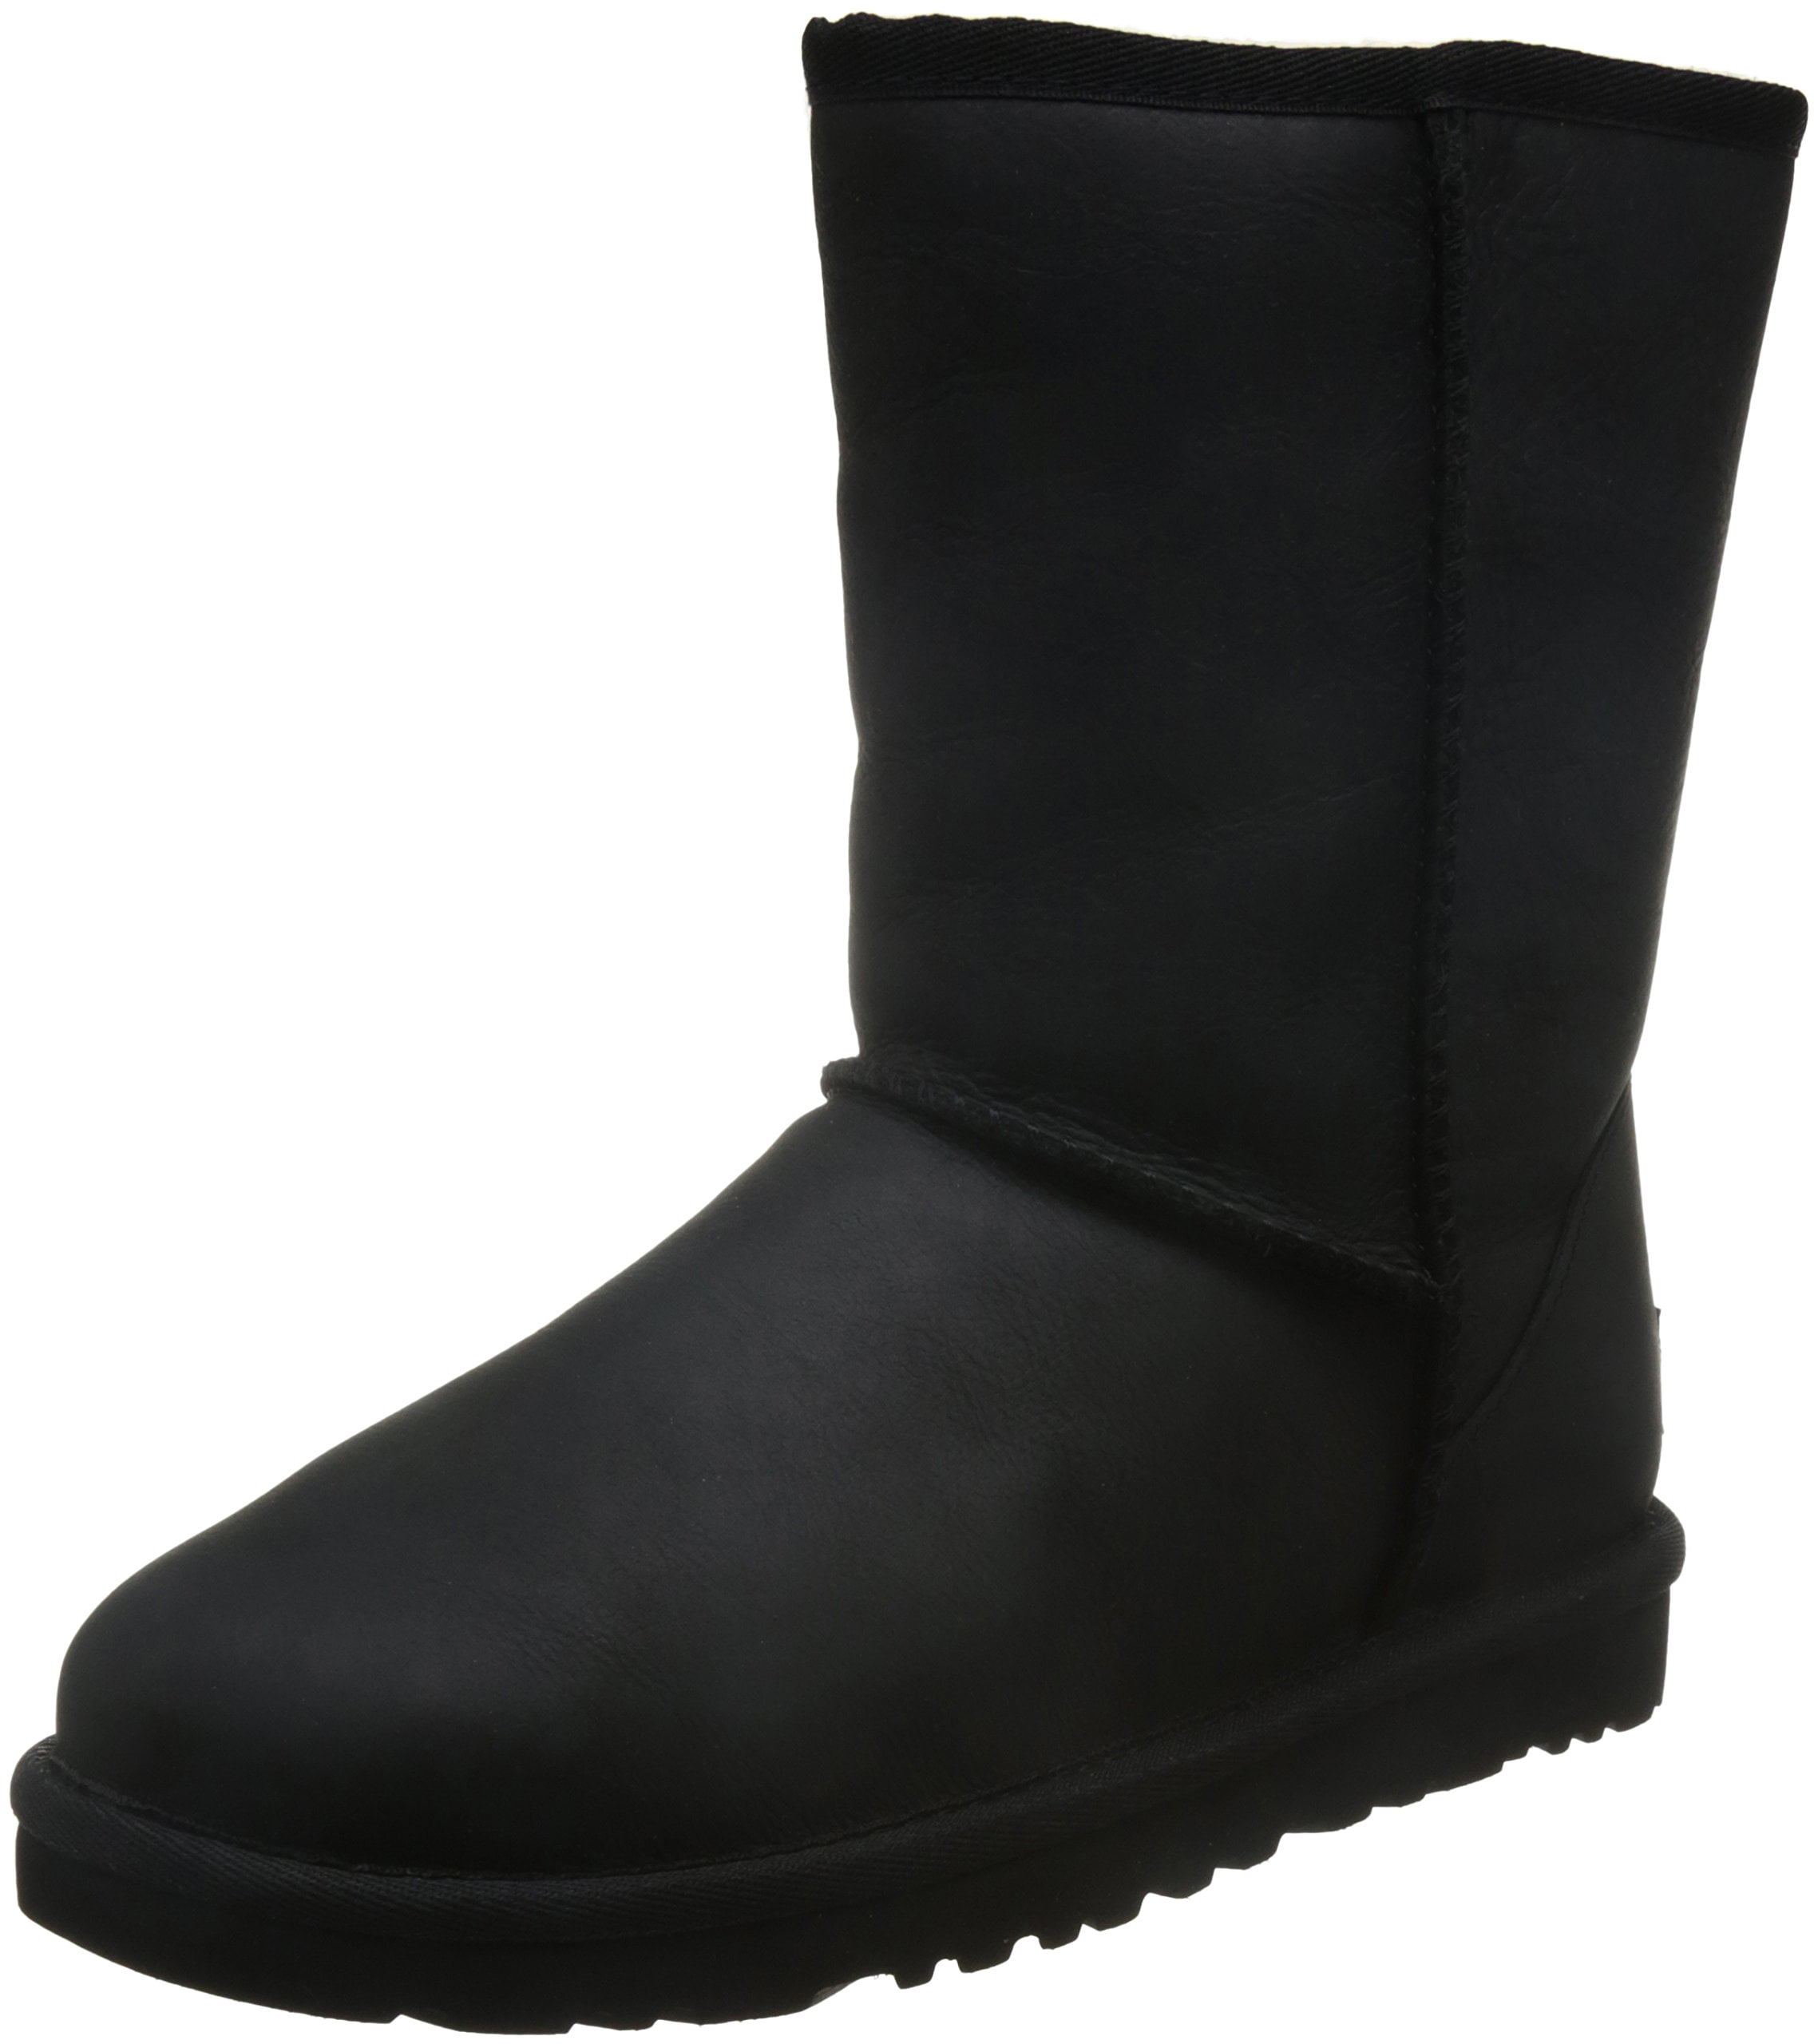 Ugg Classic Short Leather Boots Black - Walmart.com